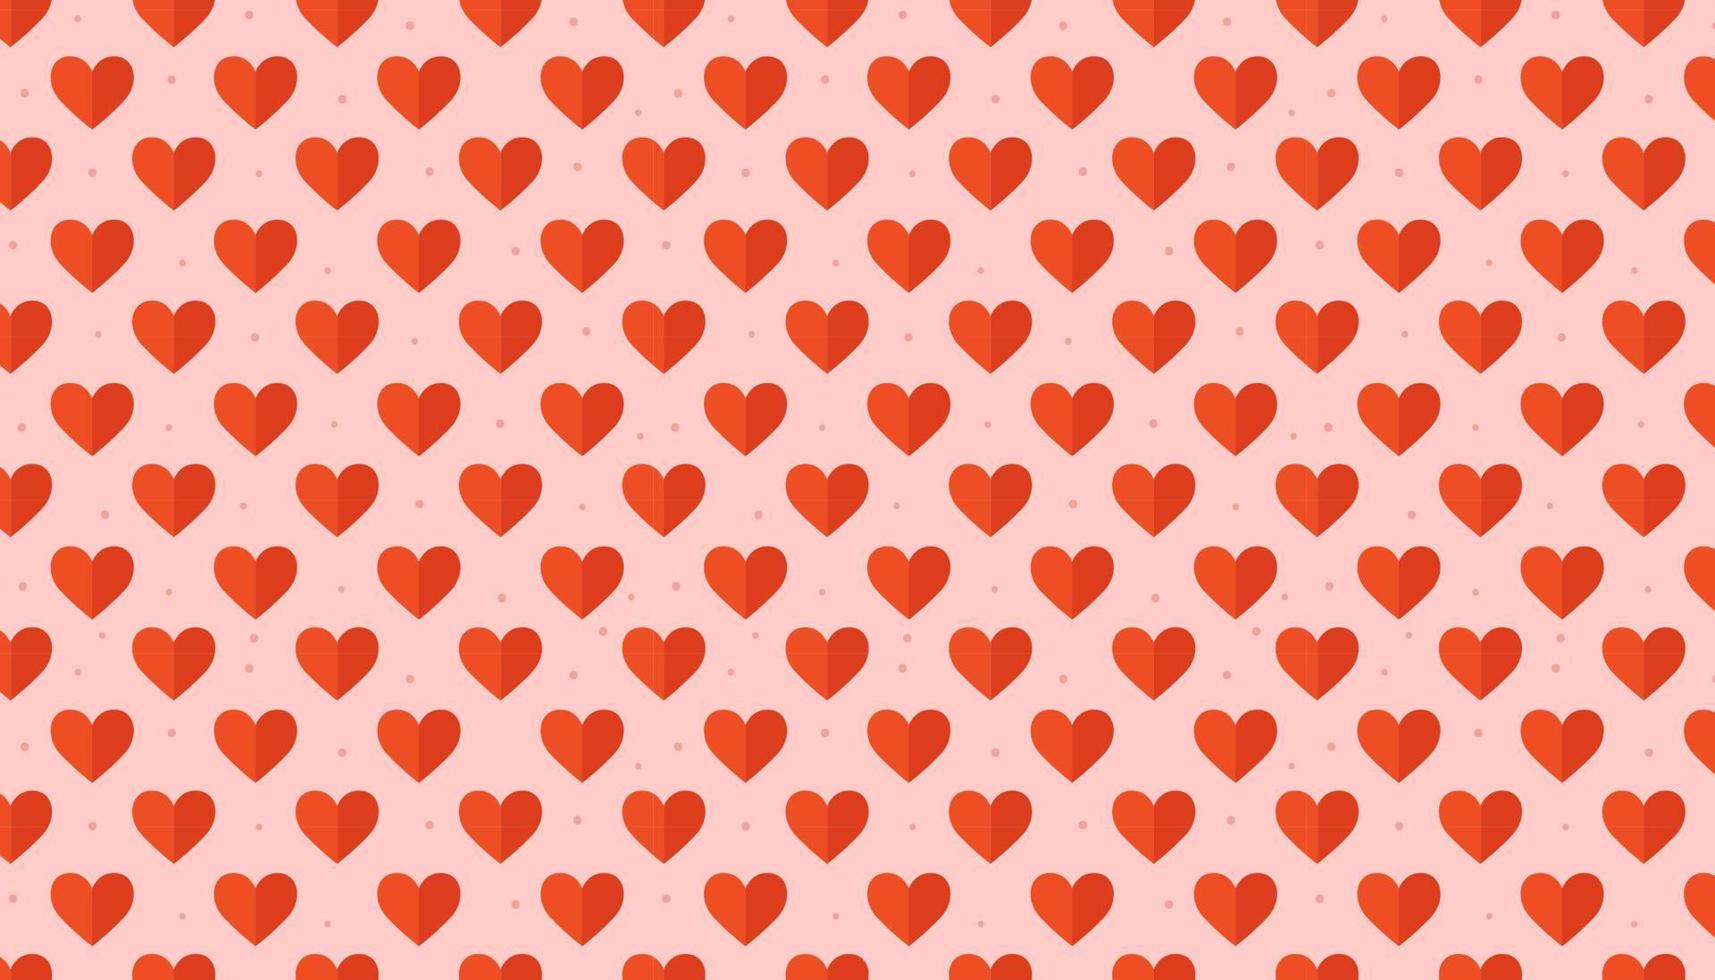 día de san valentín corazones rojos sobre fondo rosa relación emoción pasión amor patrón textura papel banner vector